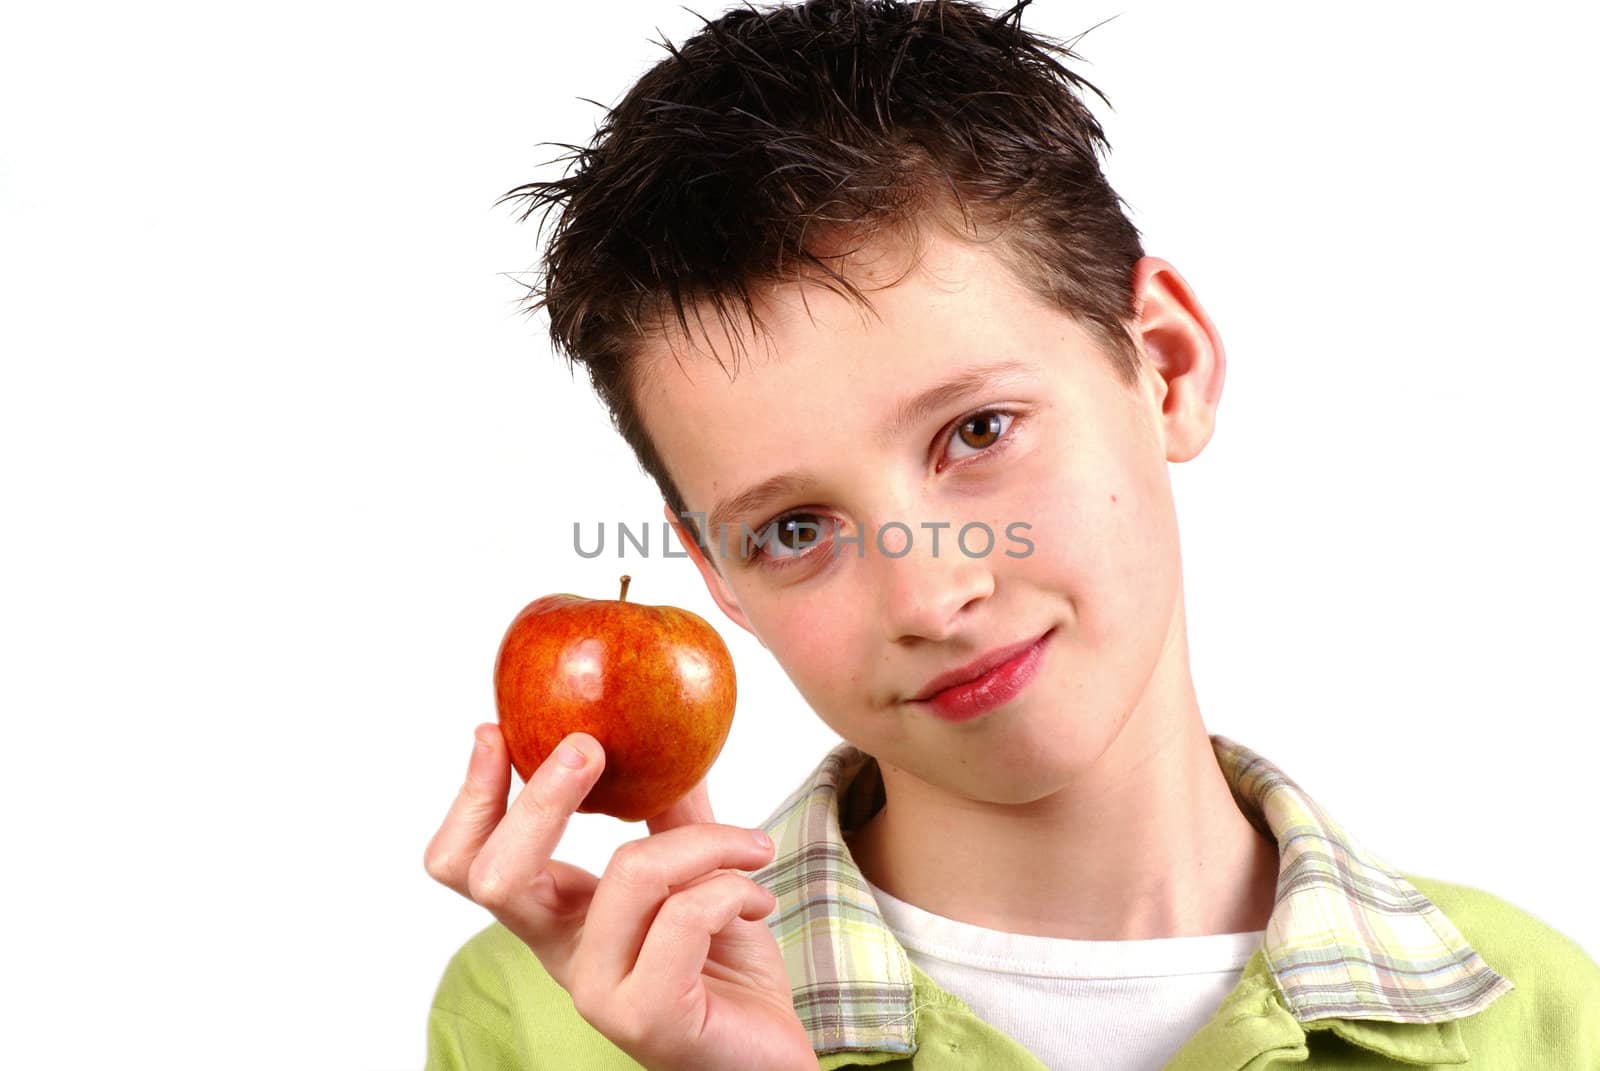 Eat healthy, take an apple. by SasPartout